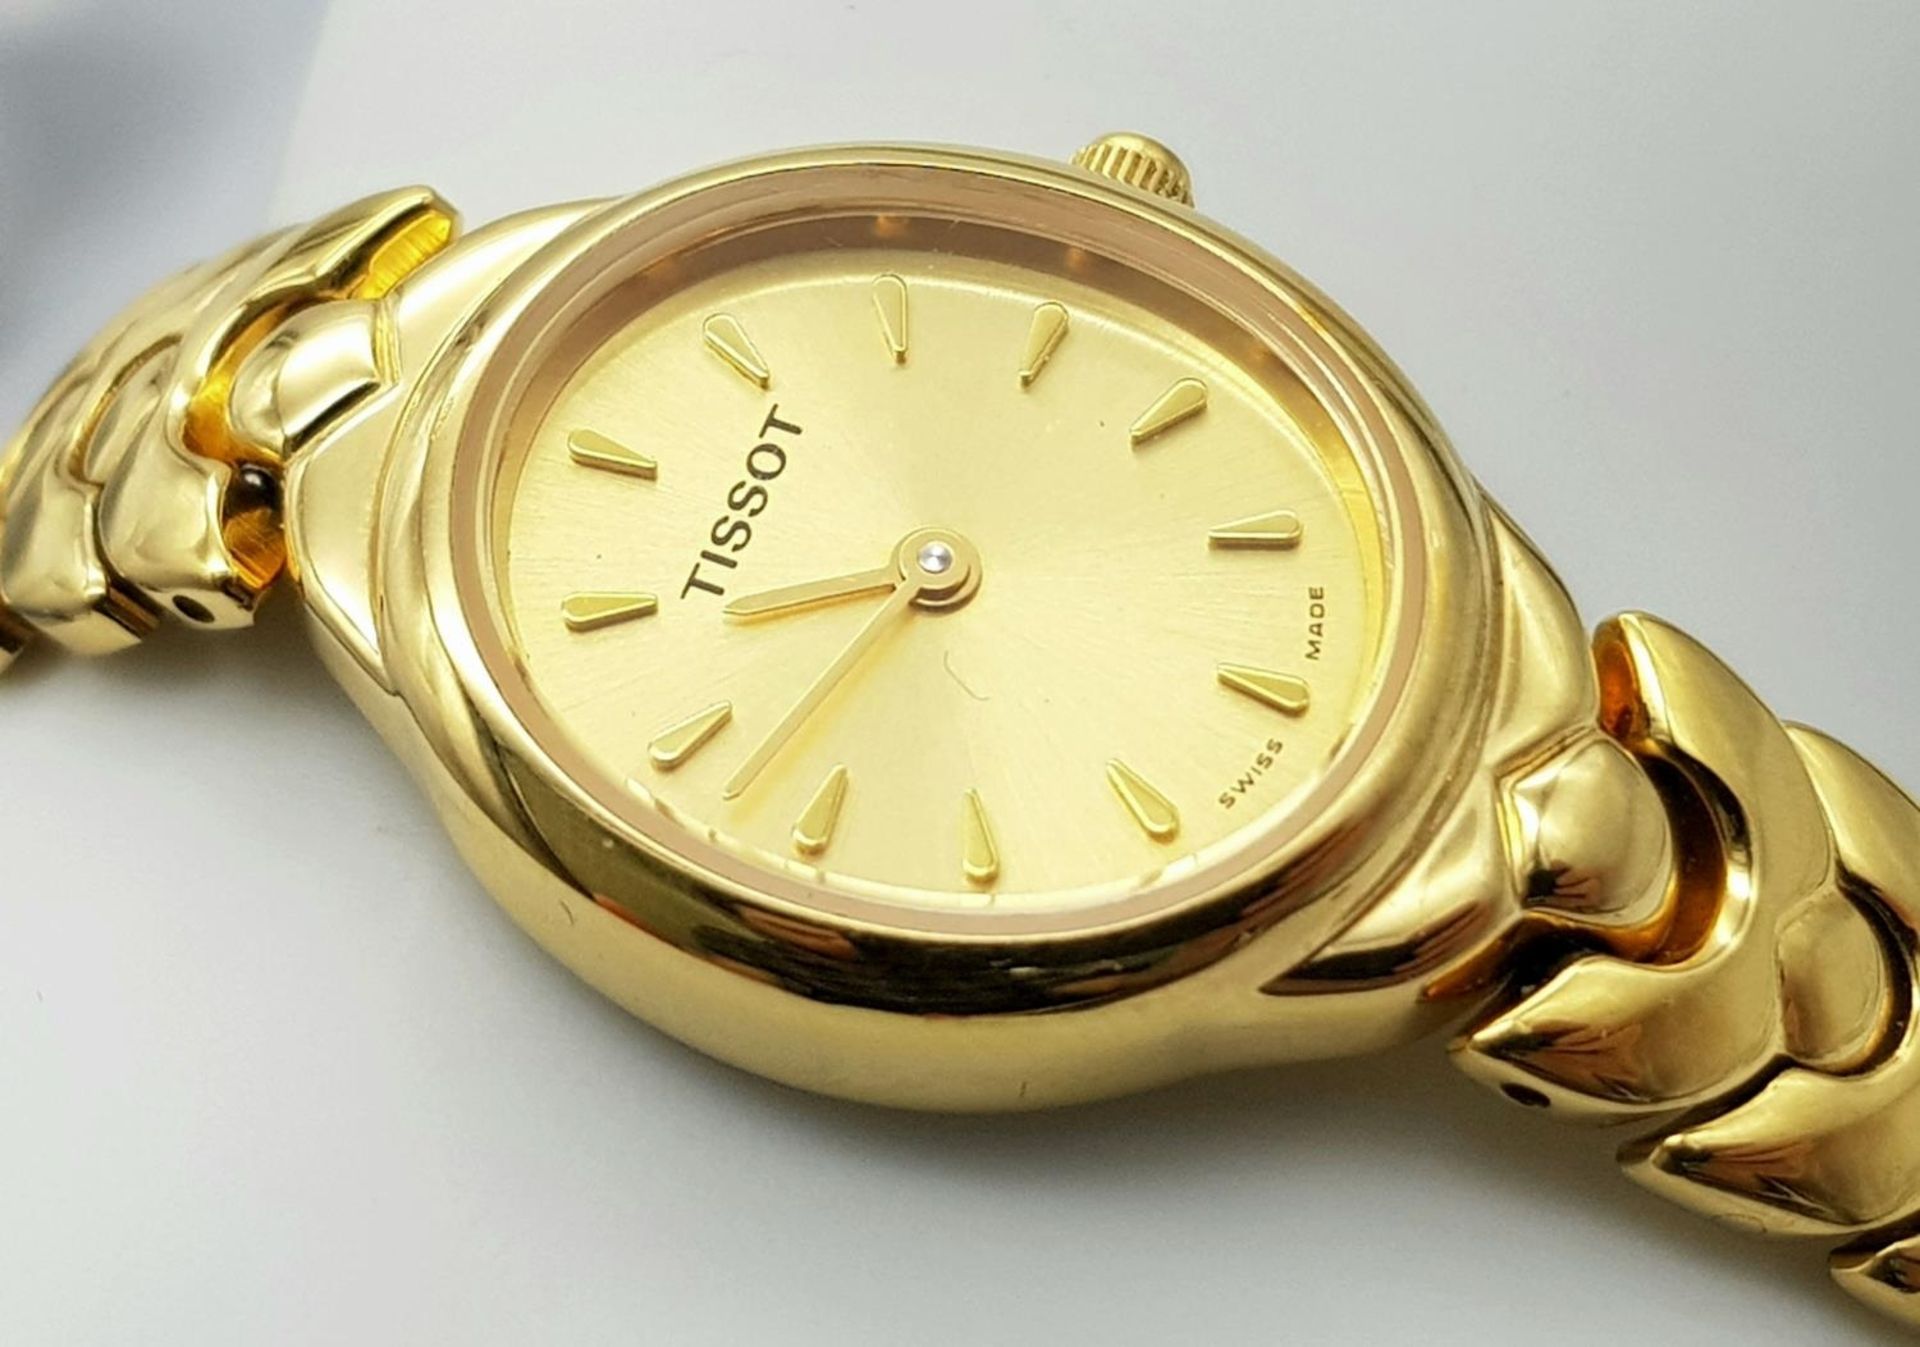 A Tissot Gold Plated Quartz Ladies Watch. Gilded bracelet and case - 21mm. Gold tone dial. In good - Bild 3 aus 6